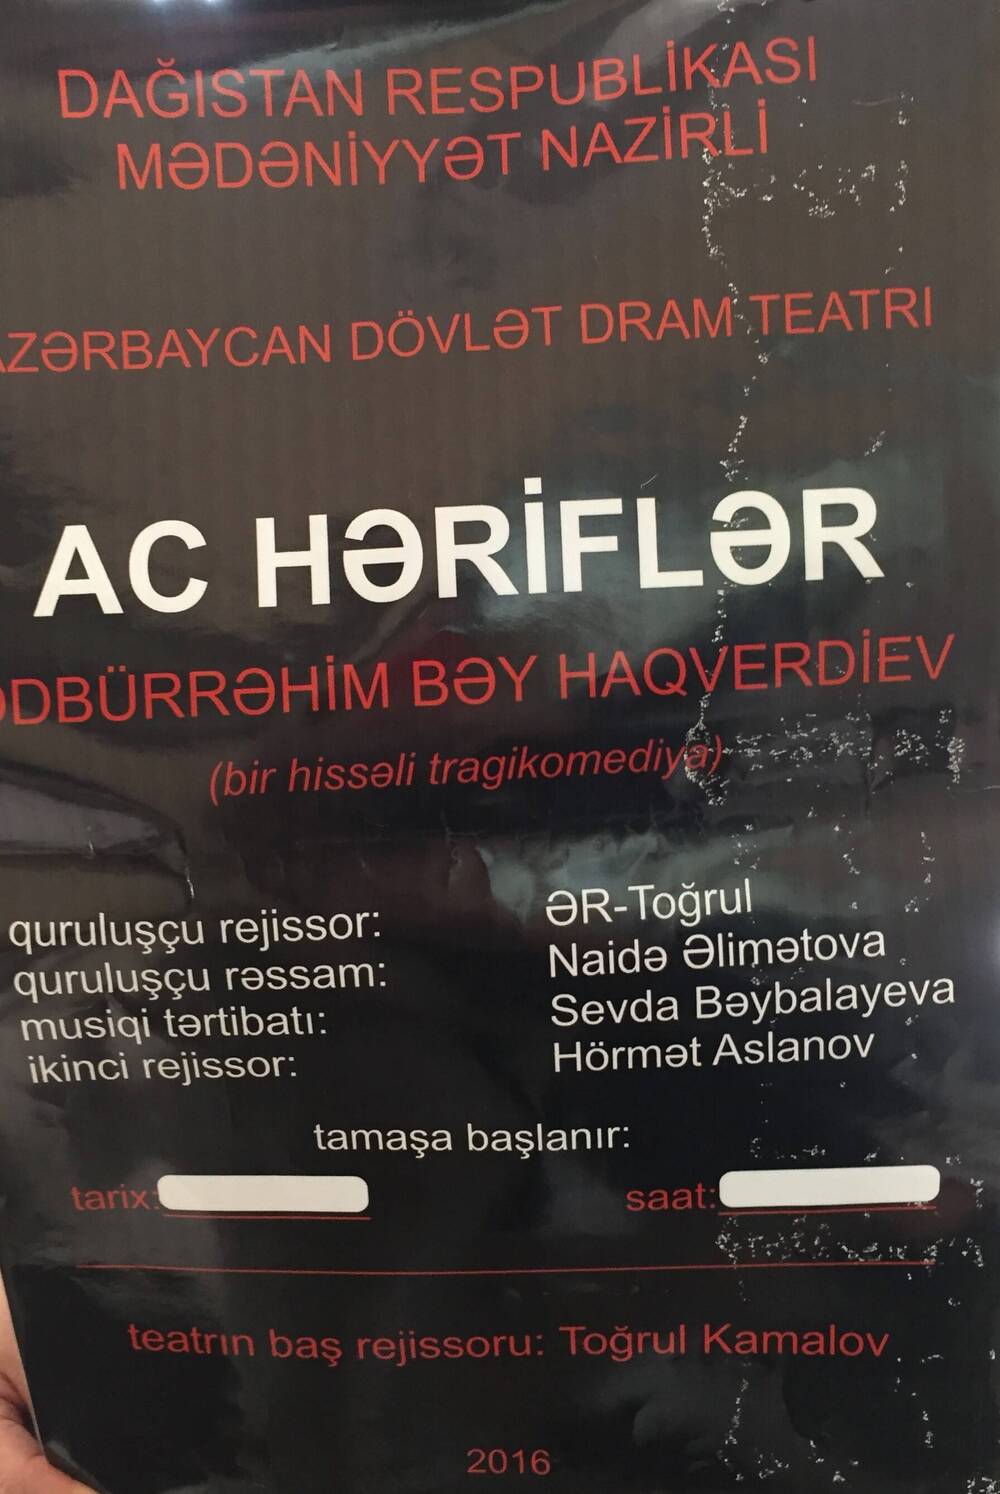 Афиша Азербайджанского гос. драм. театра  AC  HЭRIFLЭR, на азербайджанском языке.